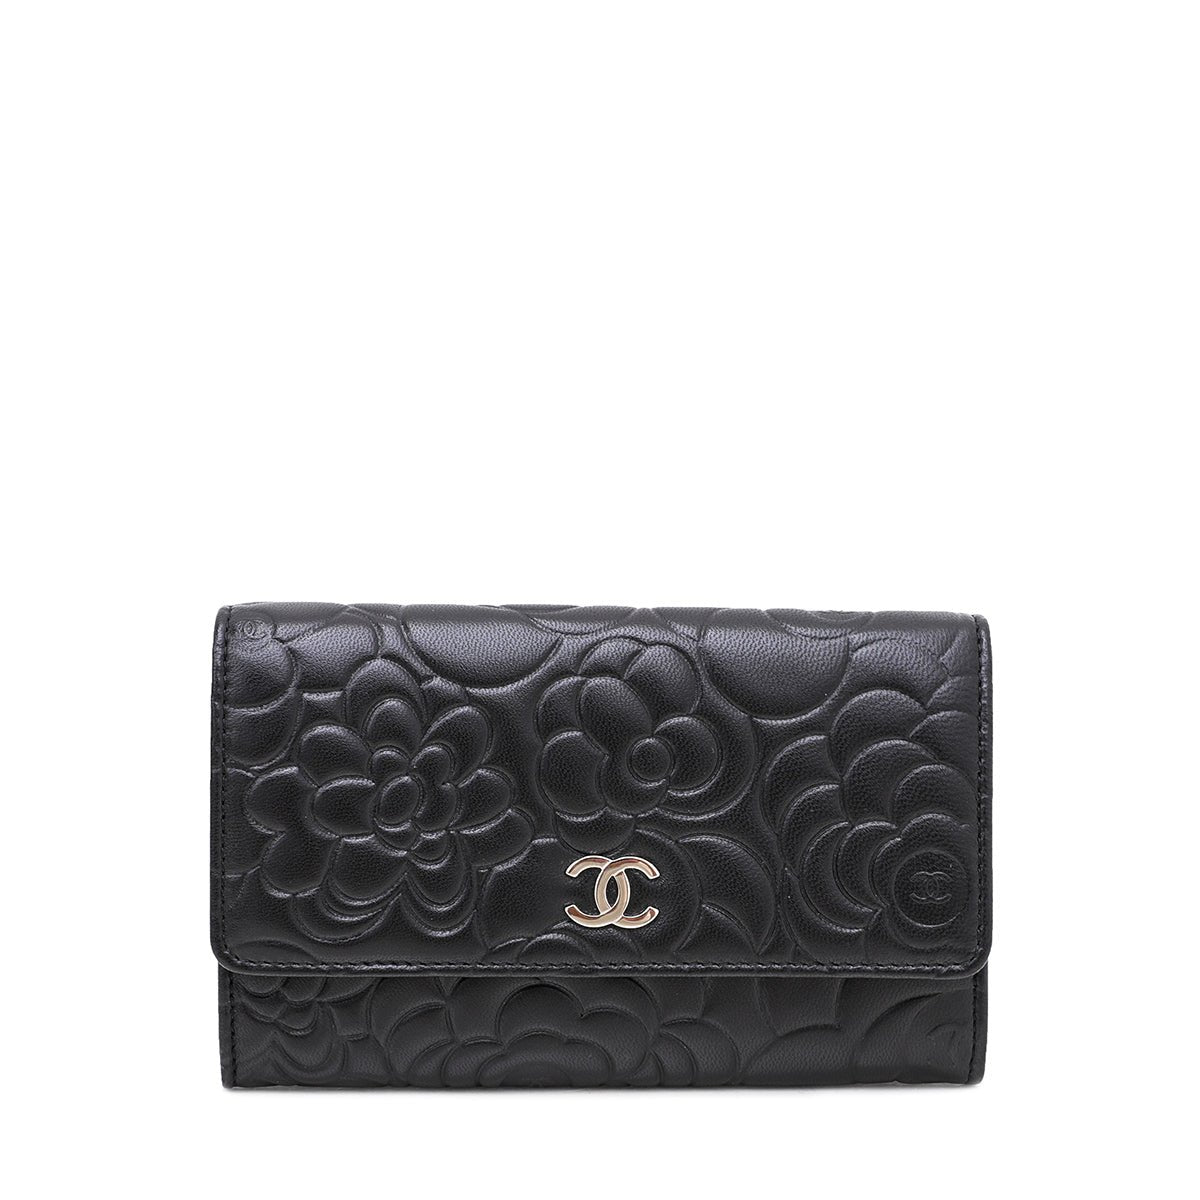 The Closet - Chanel Black CC Camellia Flap Wallet | The Closet